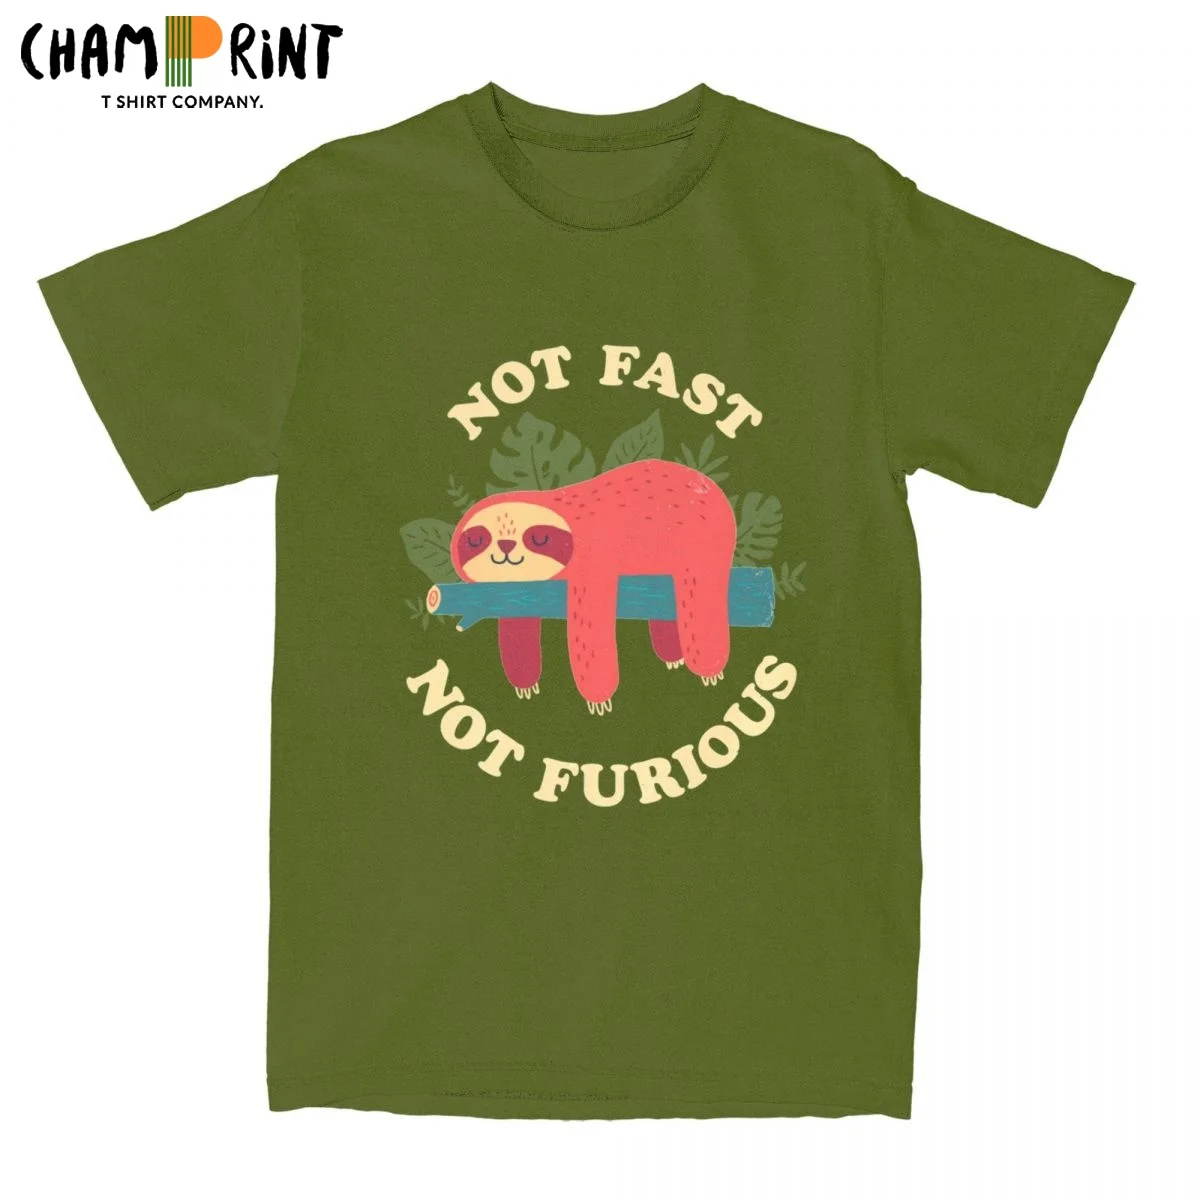 

Not Fast Not Furious Cartoons Printing Men Tee Shirts Breathable Brand Tops Street Fashion T-shirt Mens Casual Summer T Shirts